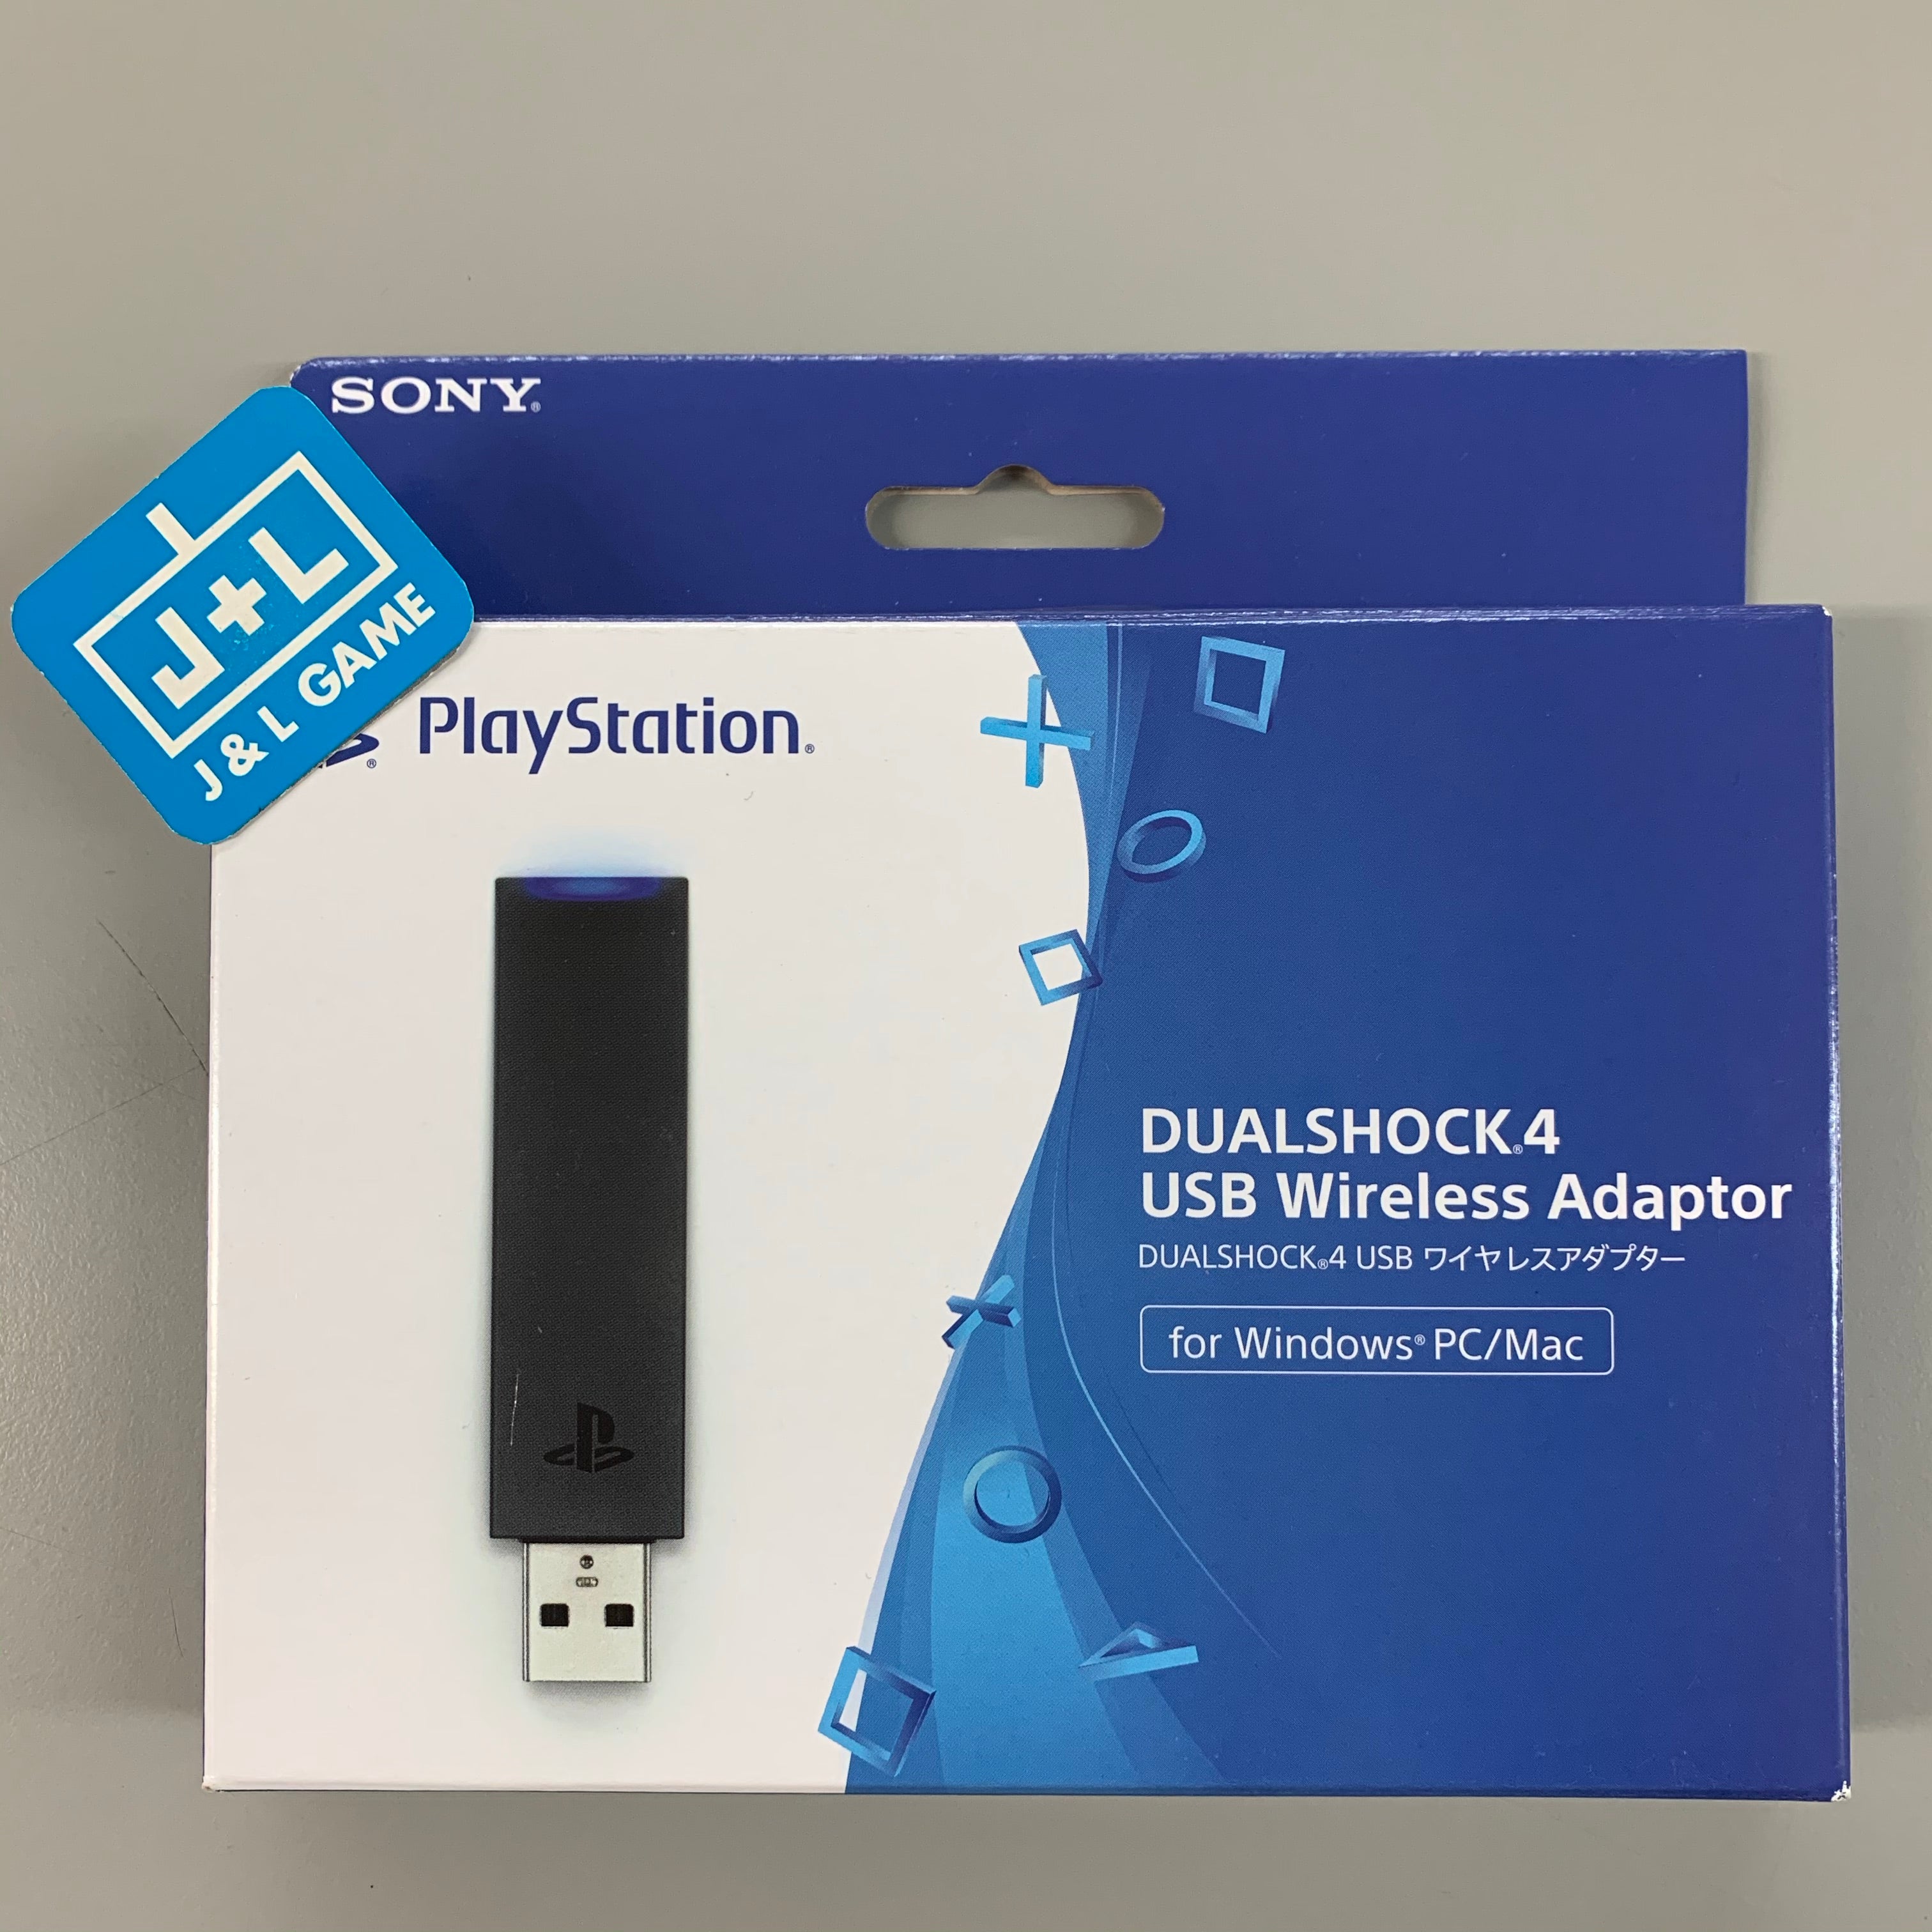 Sony Dual Shock 4 USB Wireless Adapter - PlayStation 4 Accessories Sony   